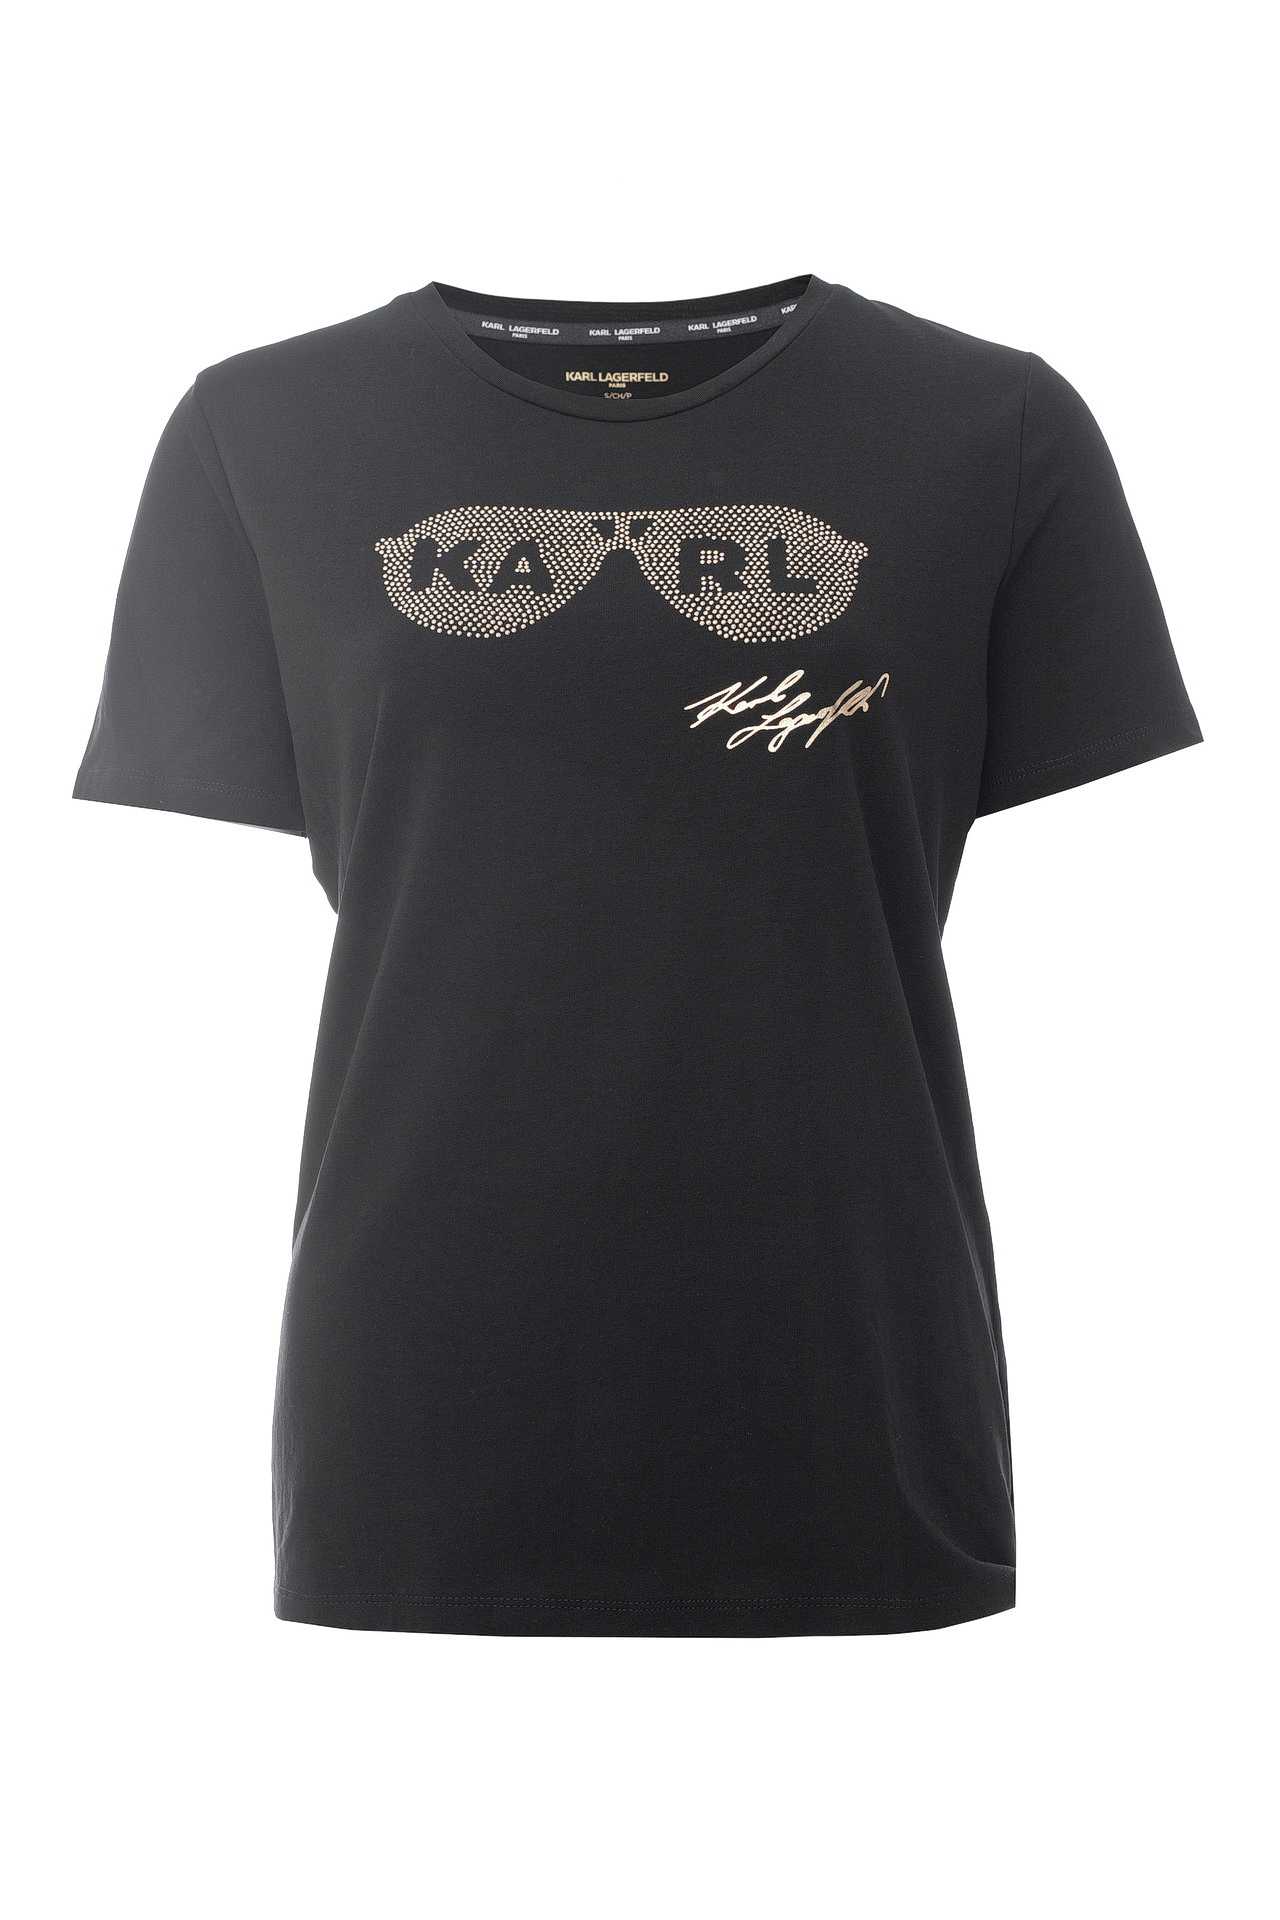 Одежда женская Футболка KARL LAGERFELD (L8WH0092/18.1). Купить за 6500 руб.